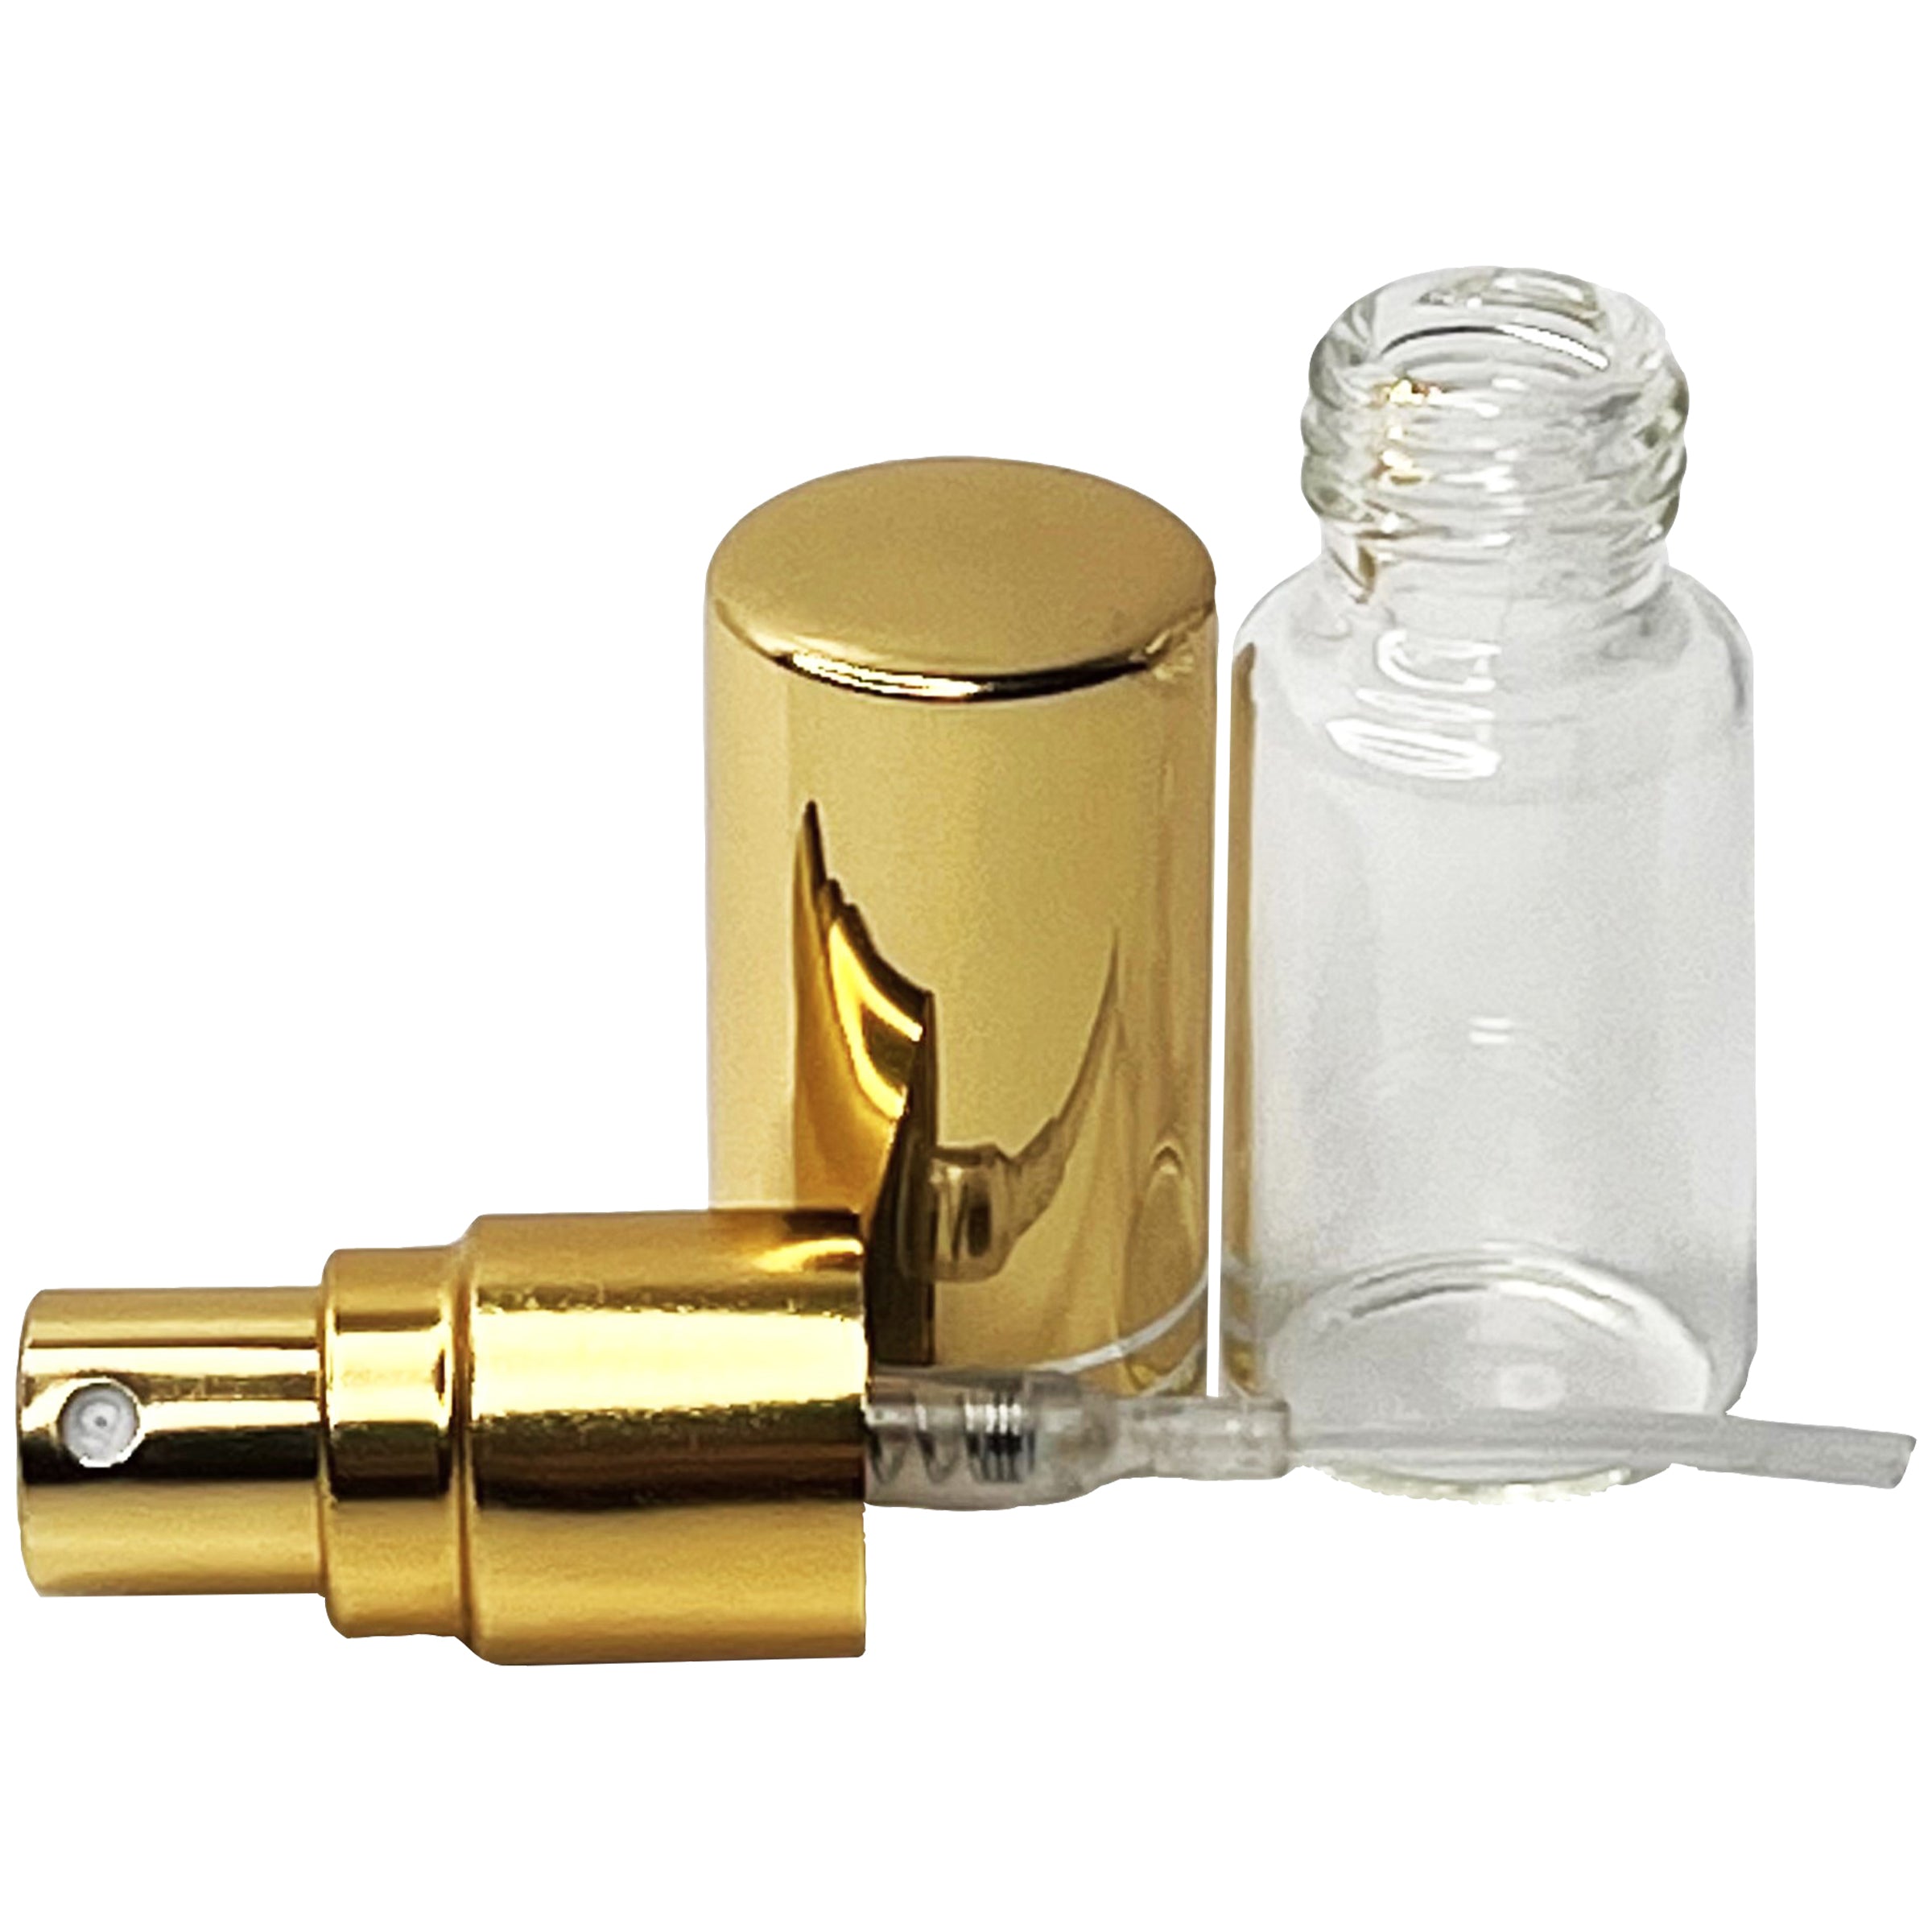 5ml 0.17oz Perfume Glass Spray Bottles Gold Line Cap